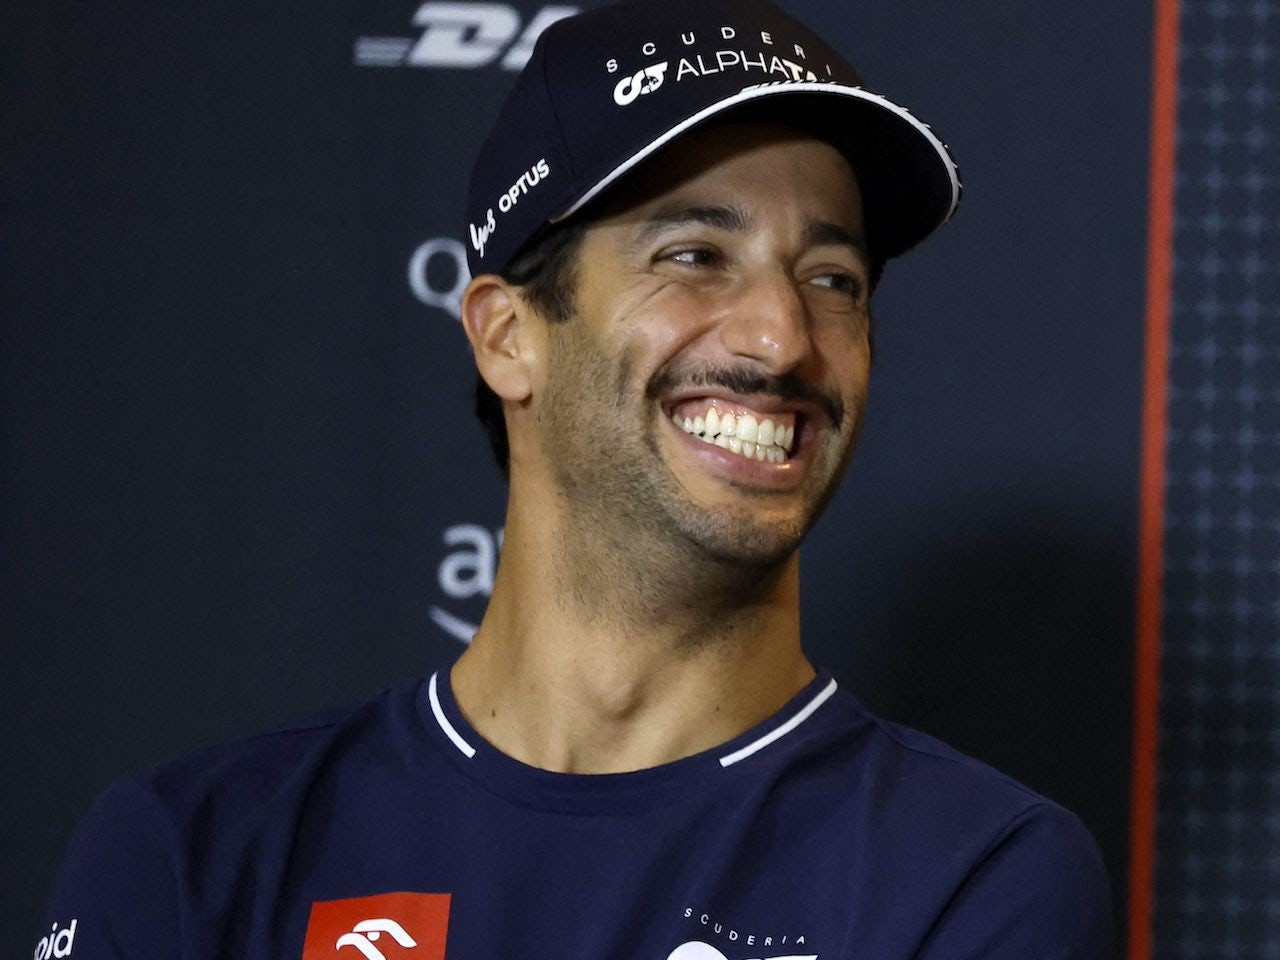 Fresh chassis brings hope for Ricciardo's dwindling F1 career